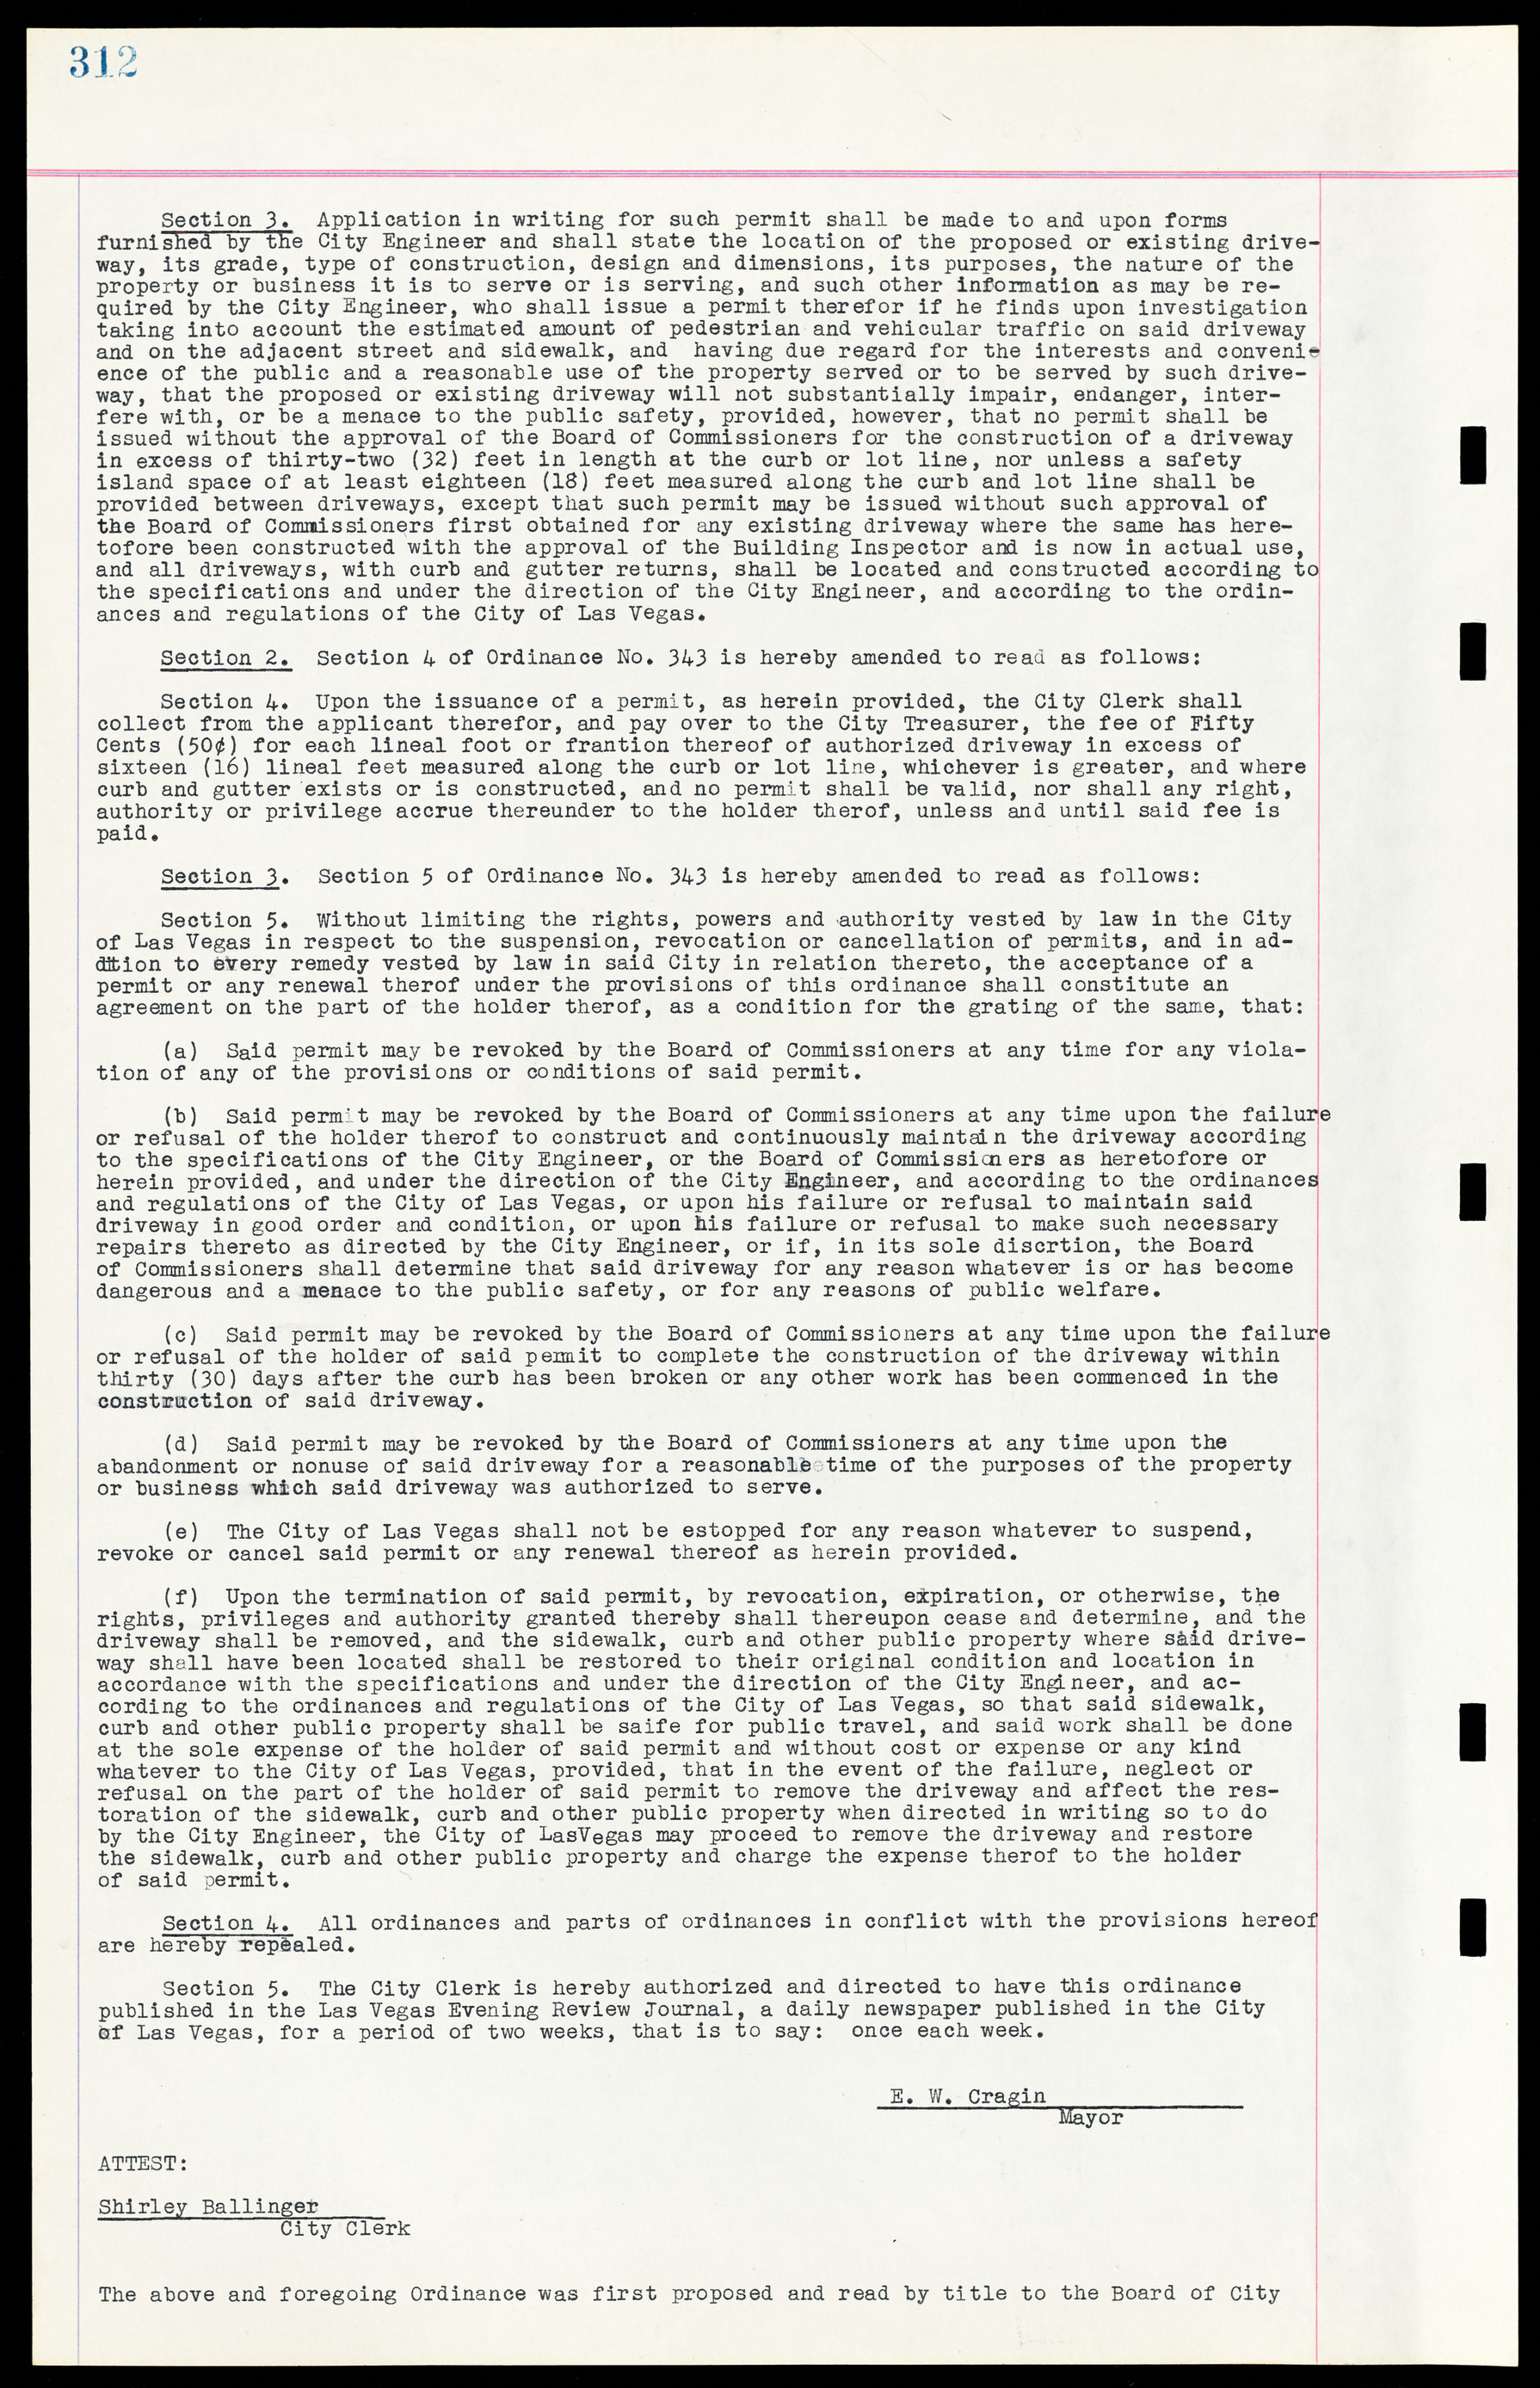 Las Vegas City Ordinances, March 31, 1933 to October 25, 1950, lvc000014-341